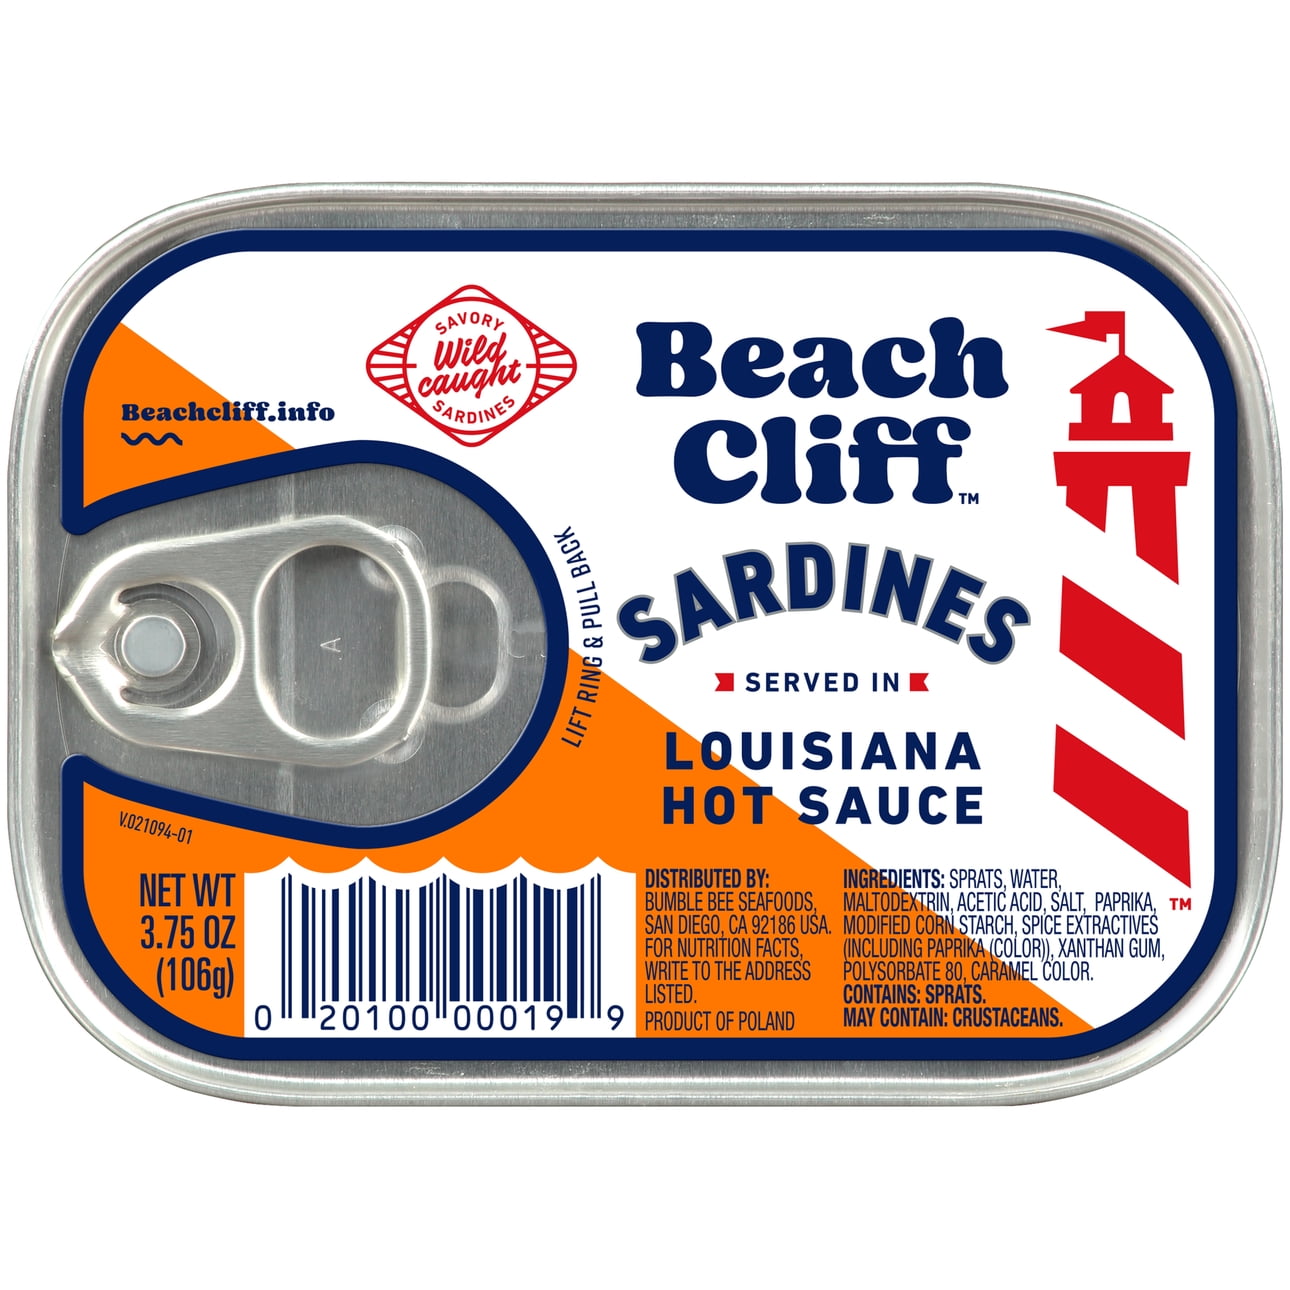 Sardines fumées La Pastis